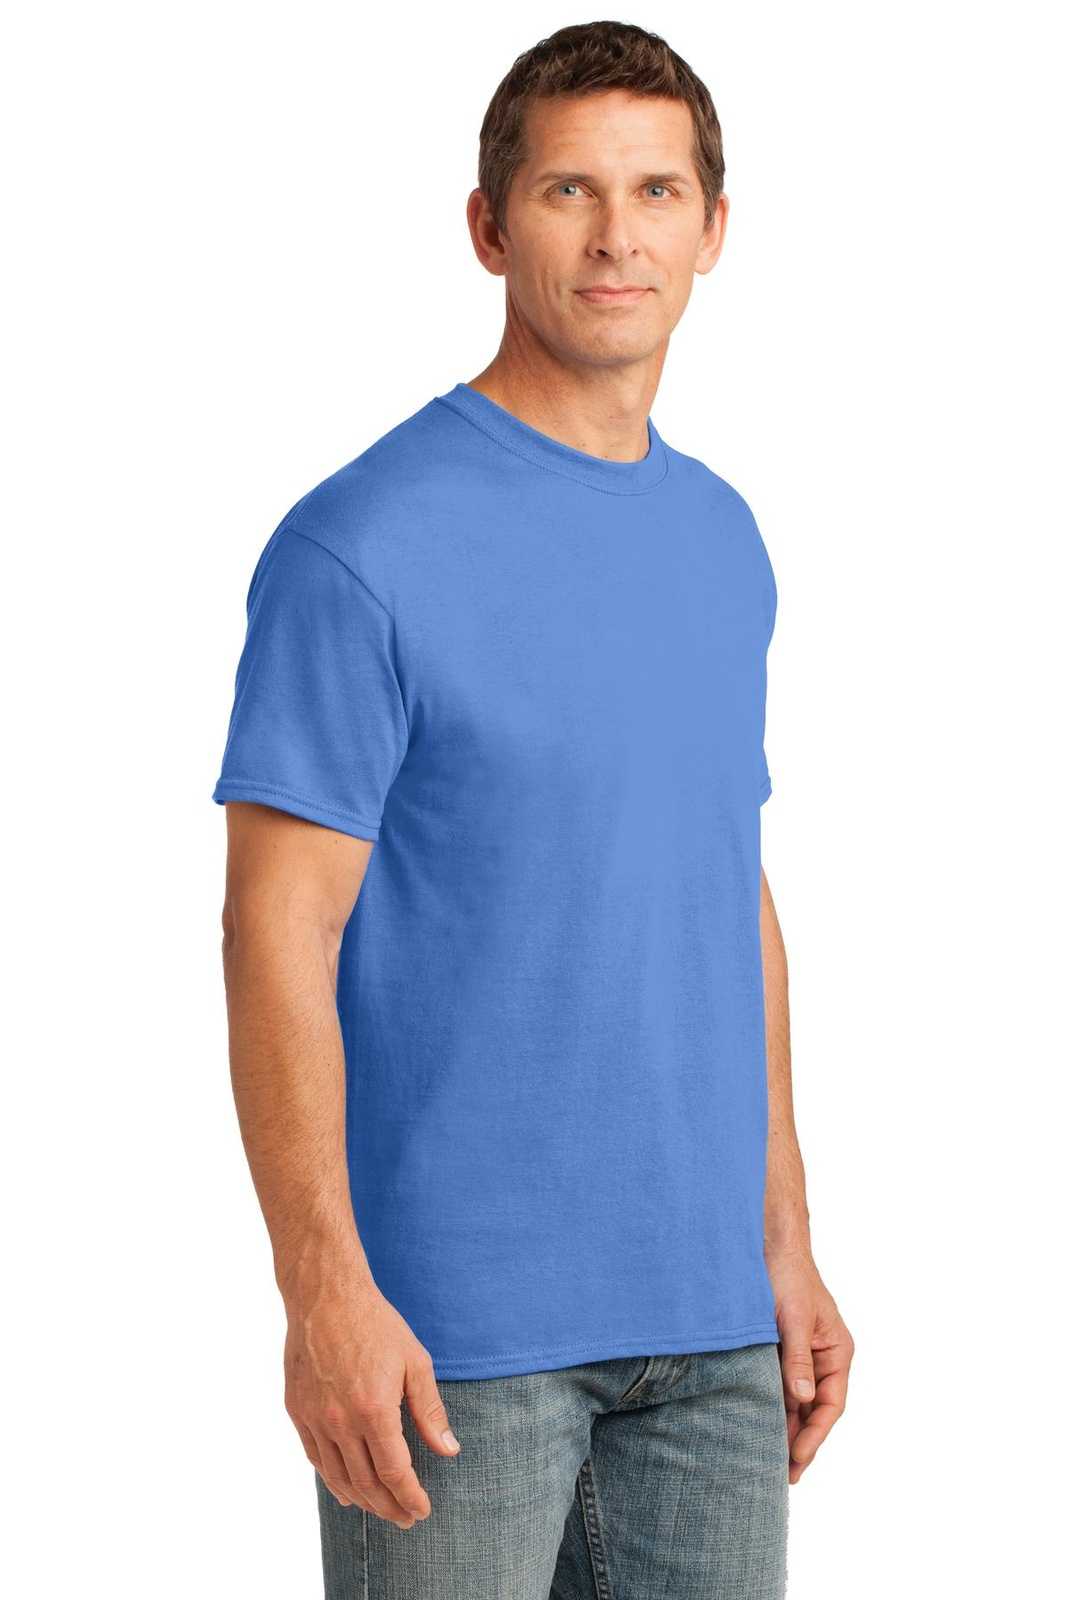 Gildan 42000 Performance T-Shirt - Carolina Blue - HIT a Double